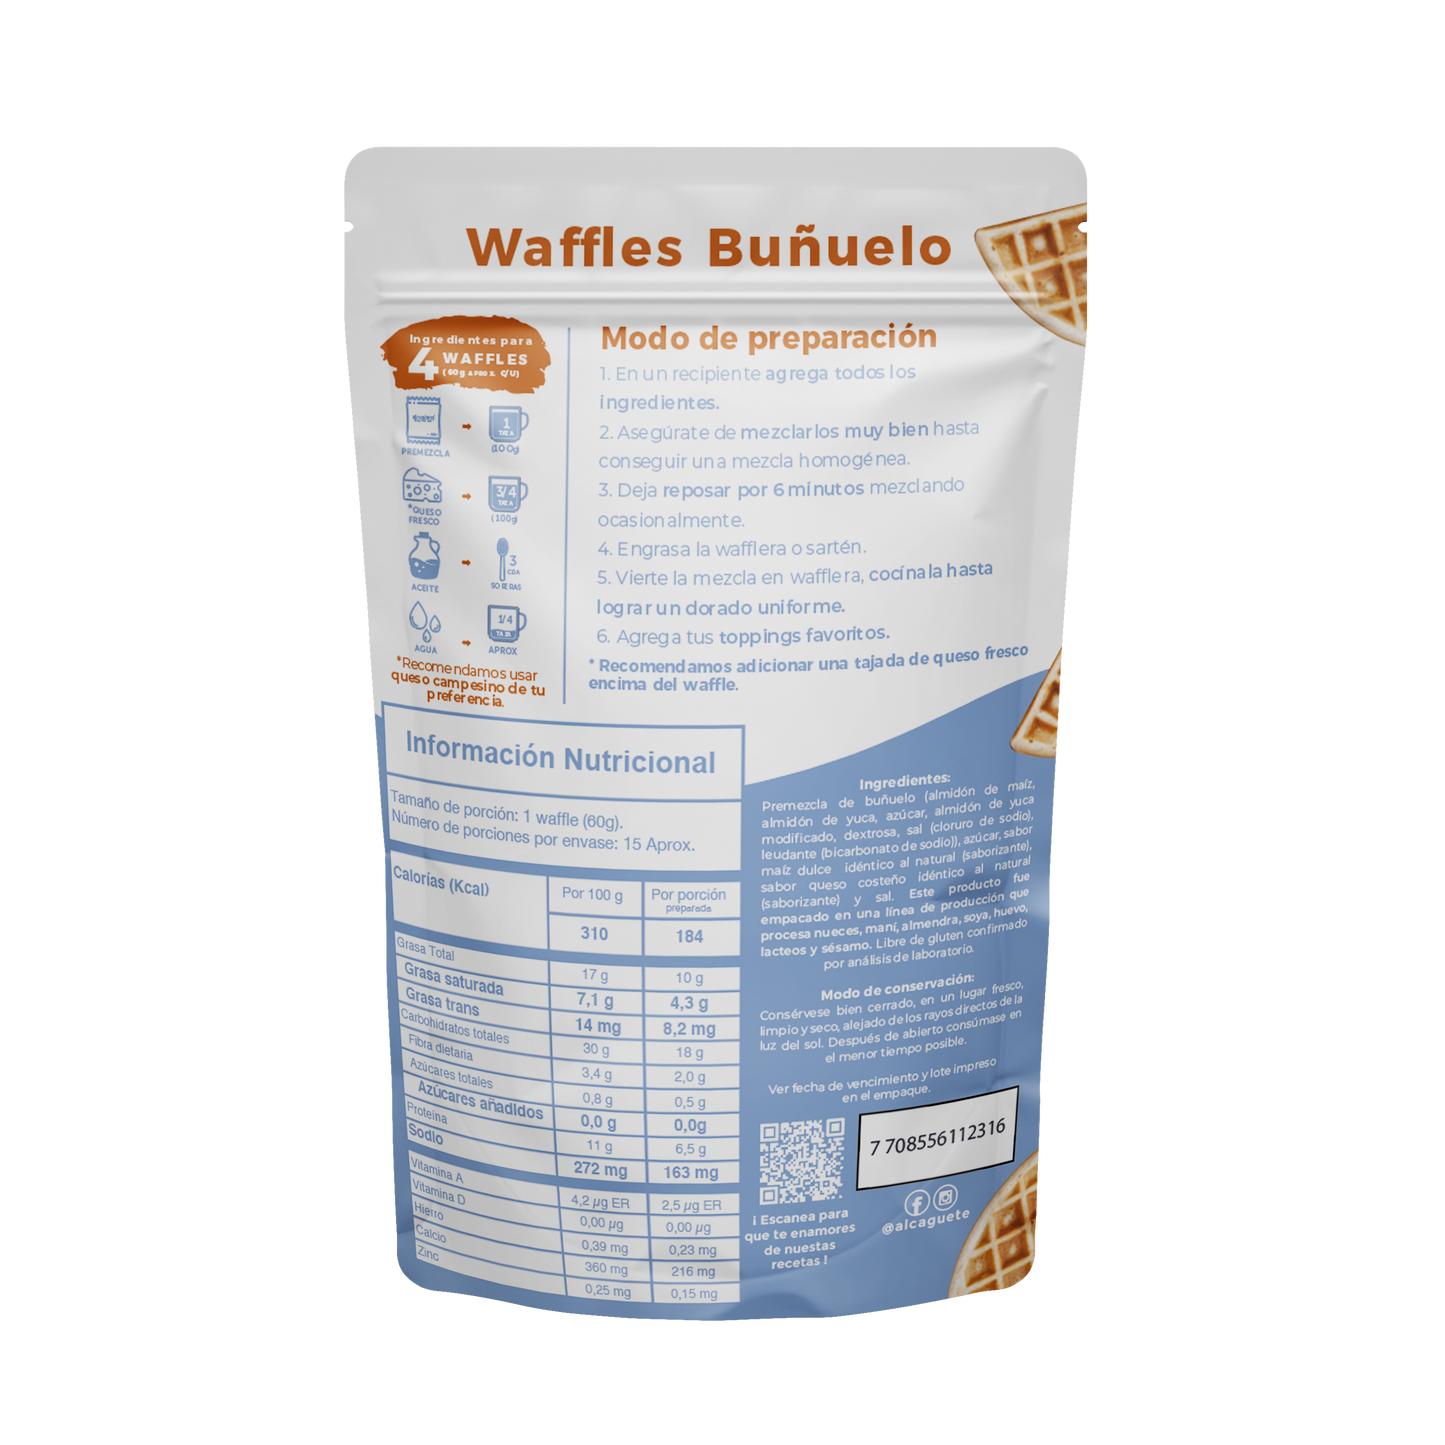 Premezcla Waffles Buñuelo 380g